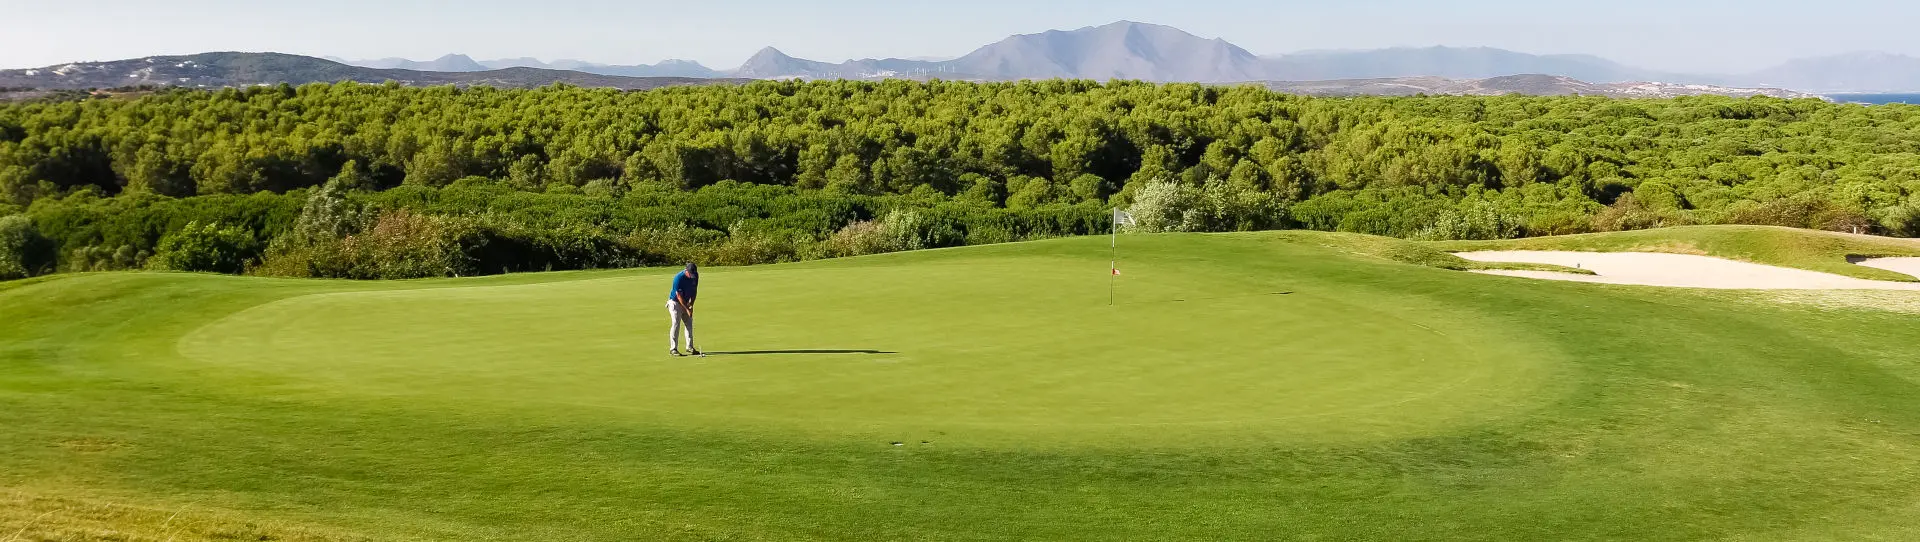 Spain Golf Driving Range - La Hacienda Alcaidesa Links Golf Resort Academy - Photo 1